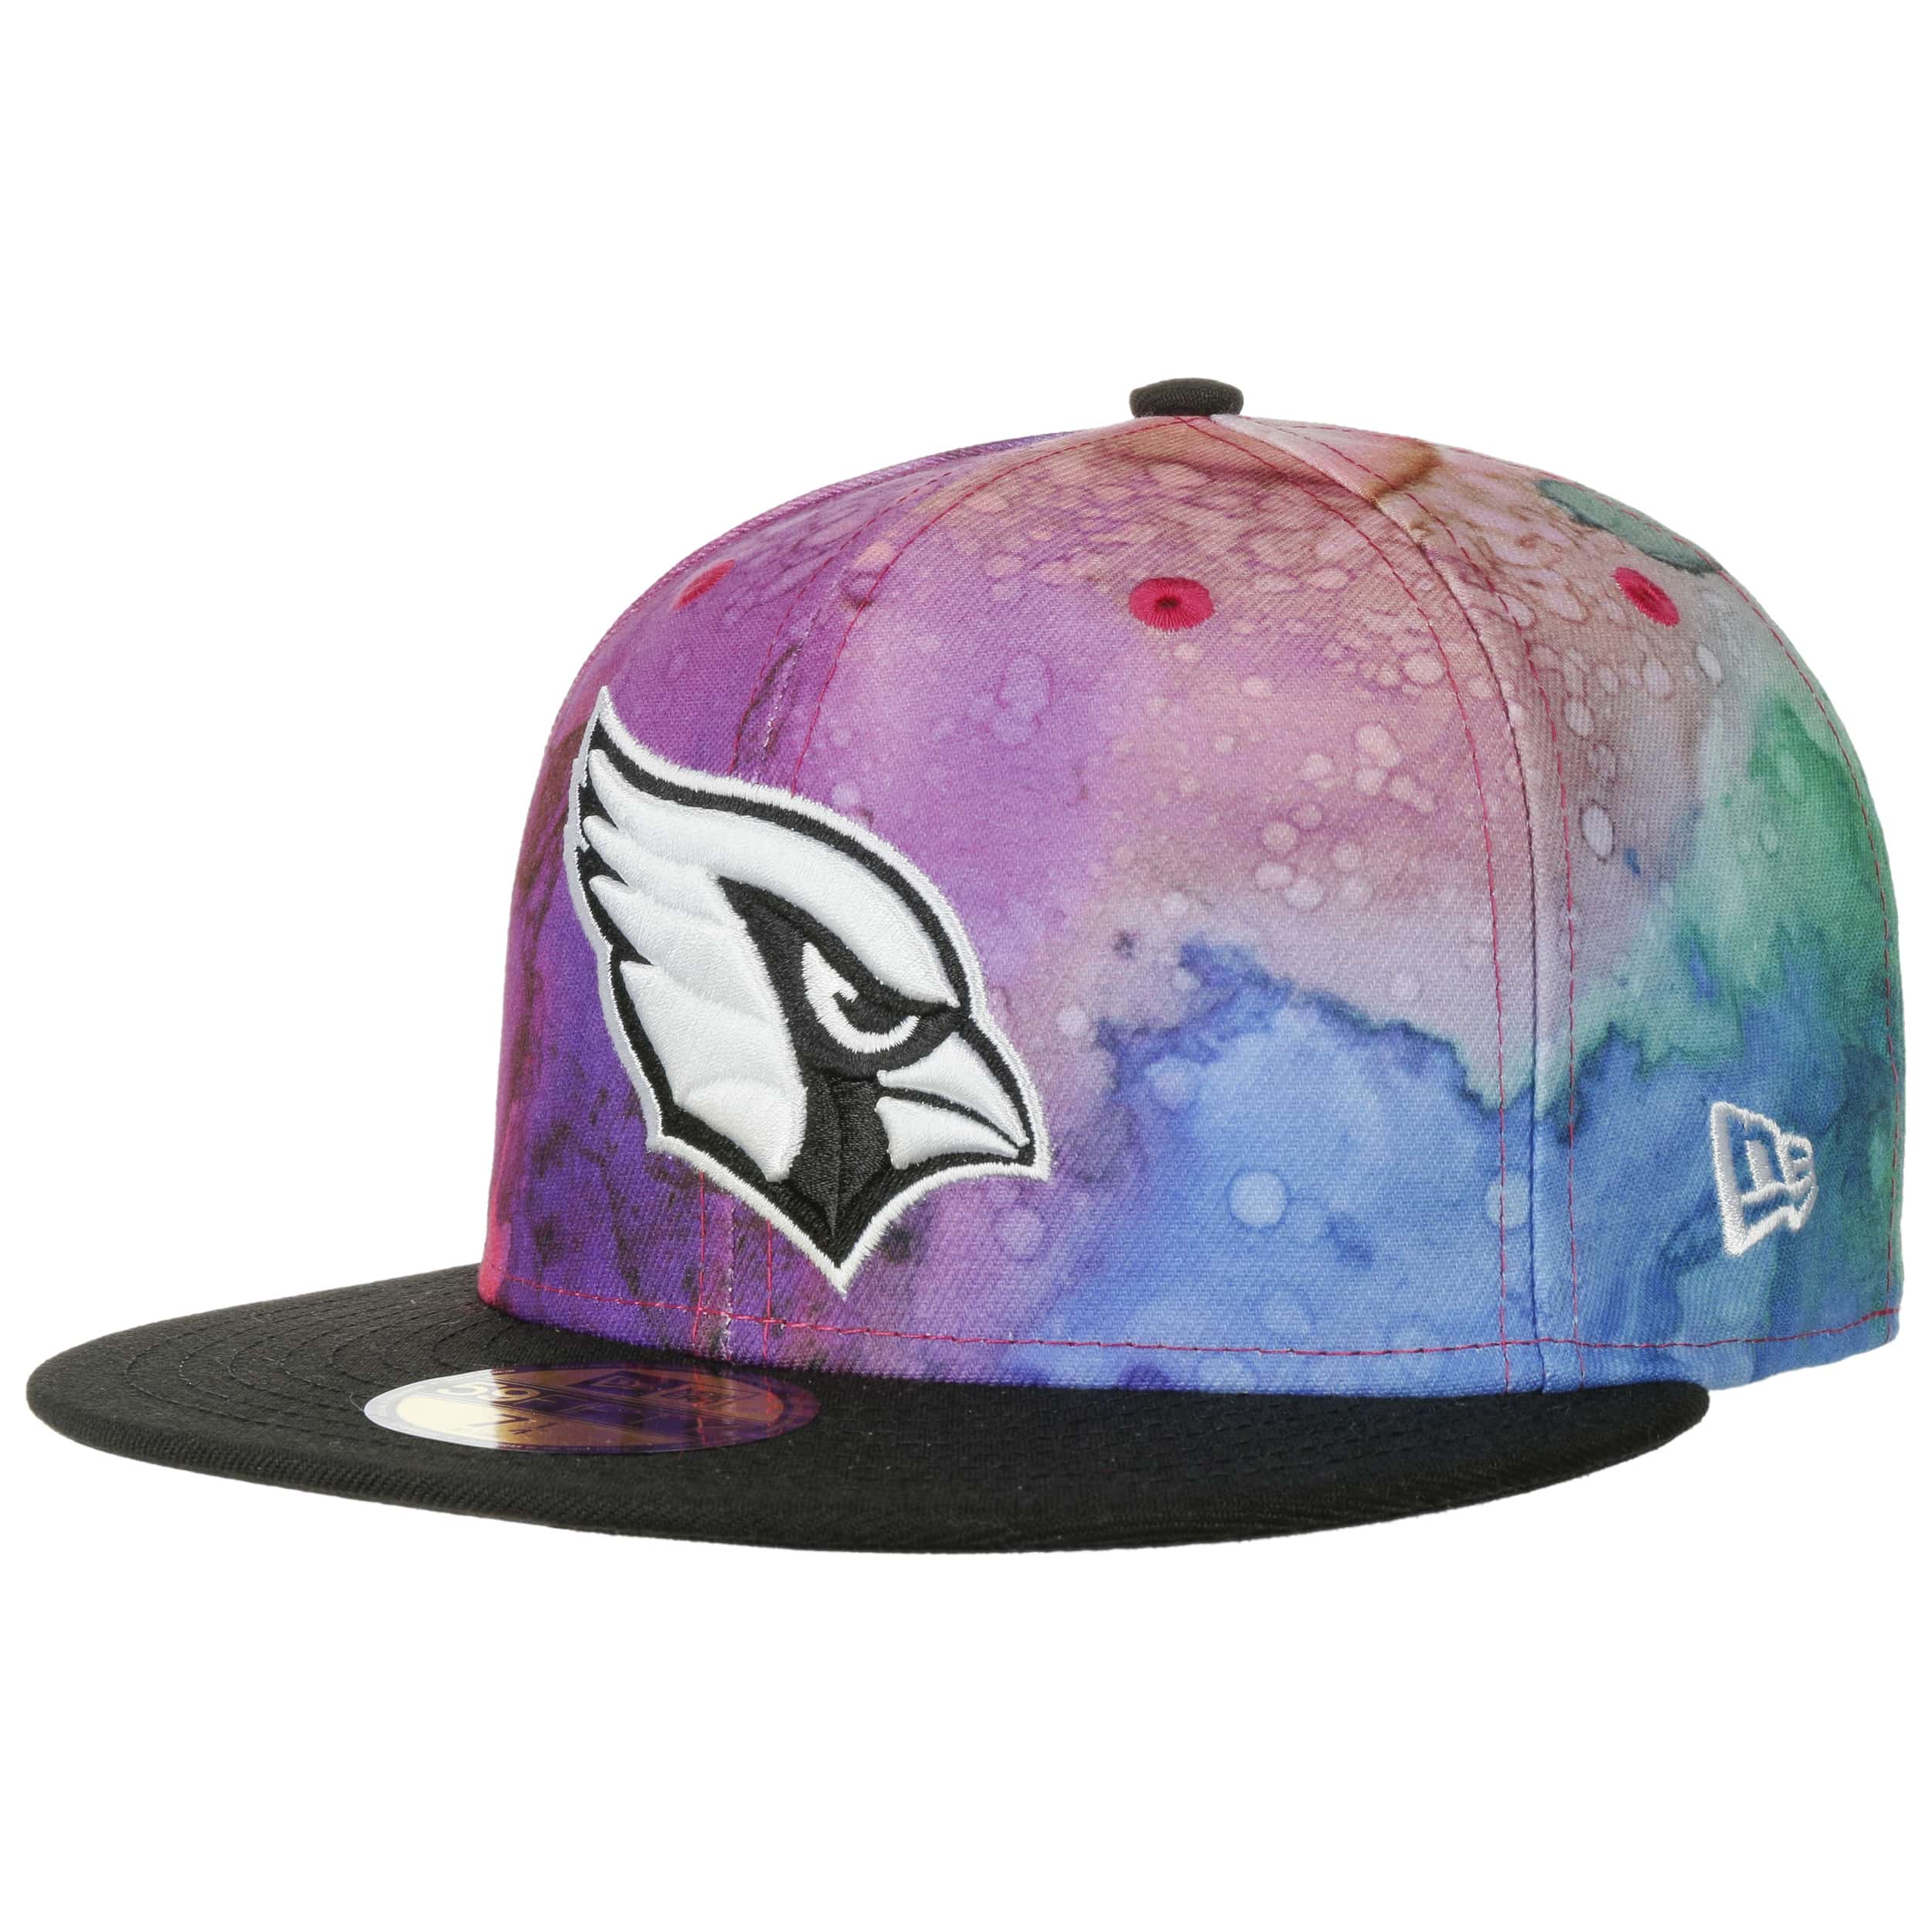 NewEra Purple Fitted Baseball Hat/Cap 59/50 size 6 7/8new,no tags